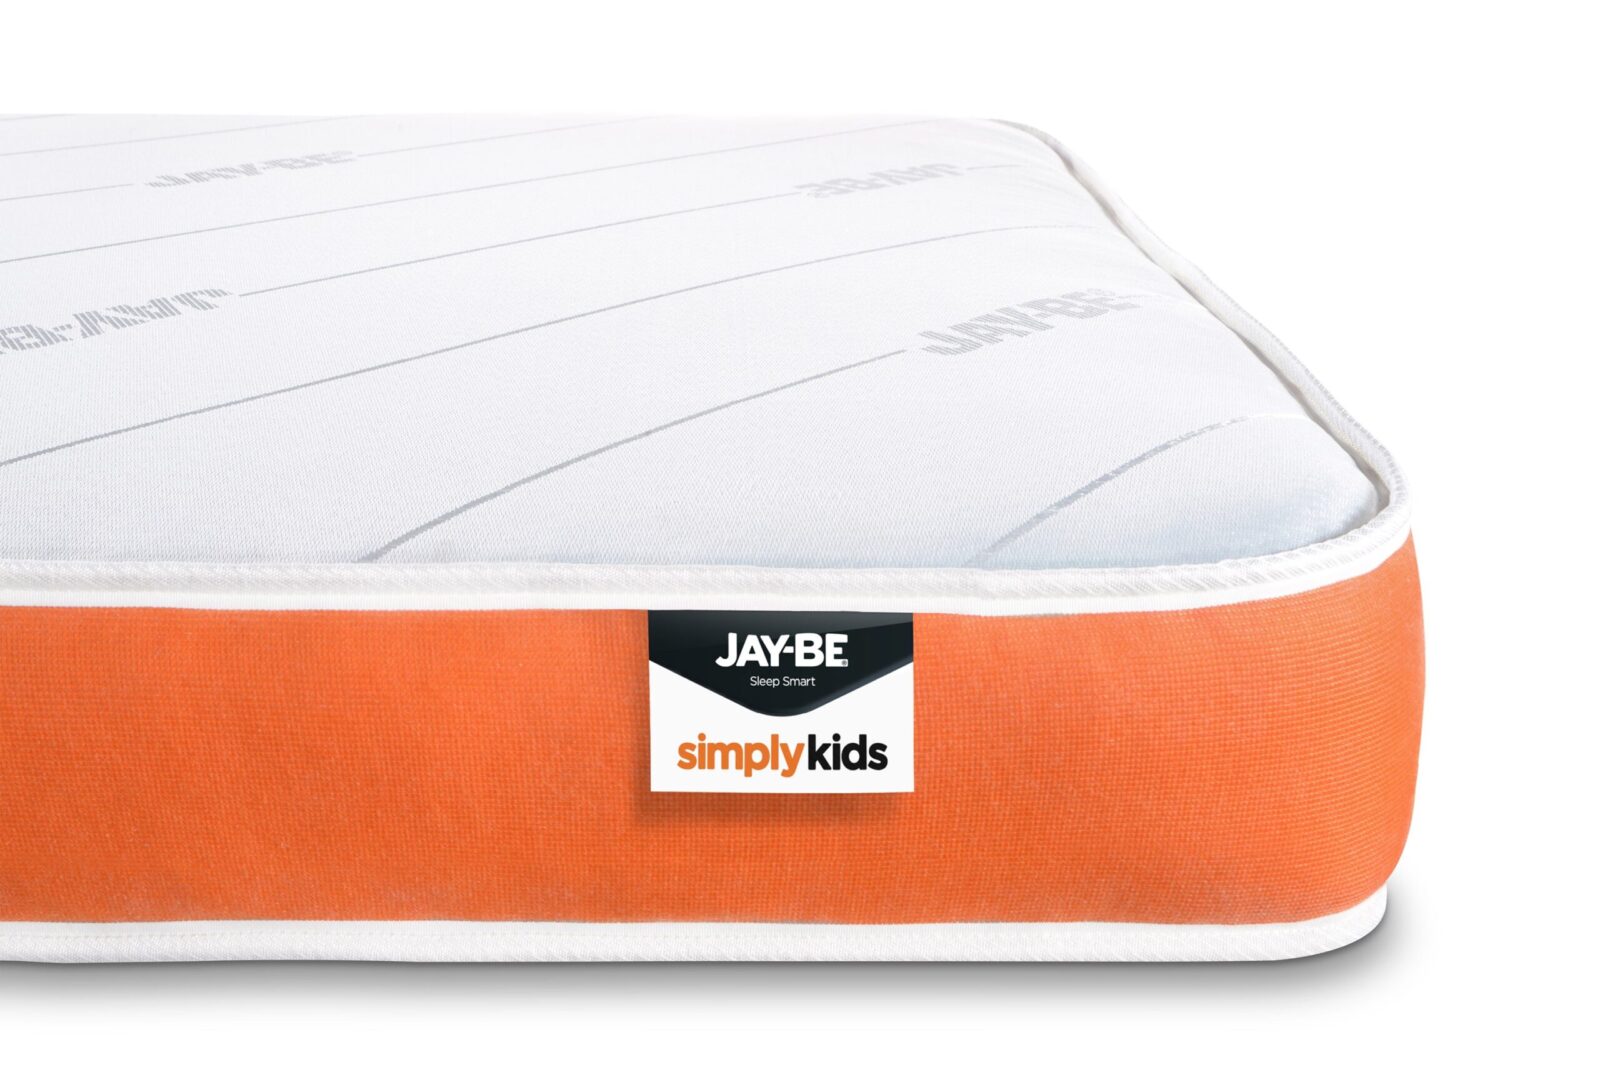 jay-be simply kids foam free spring mattress